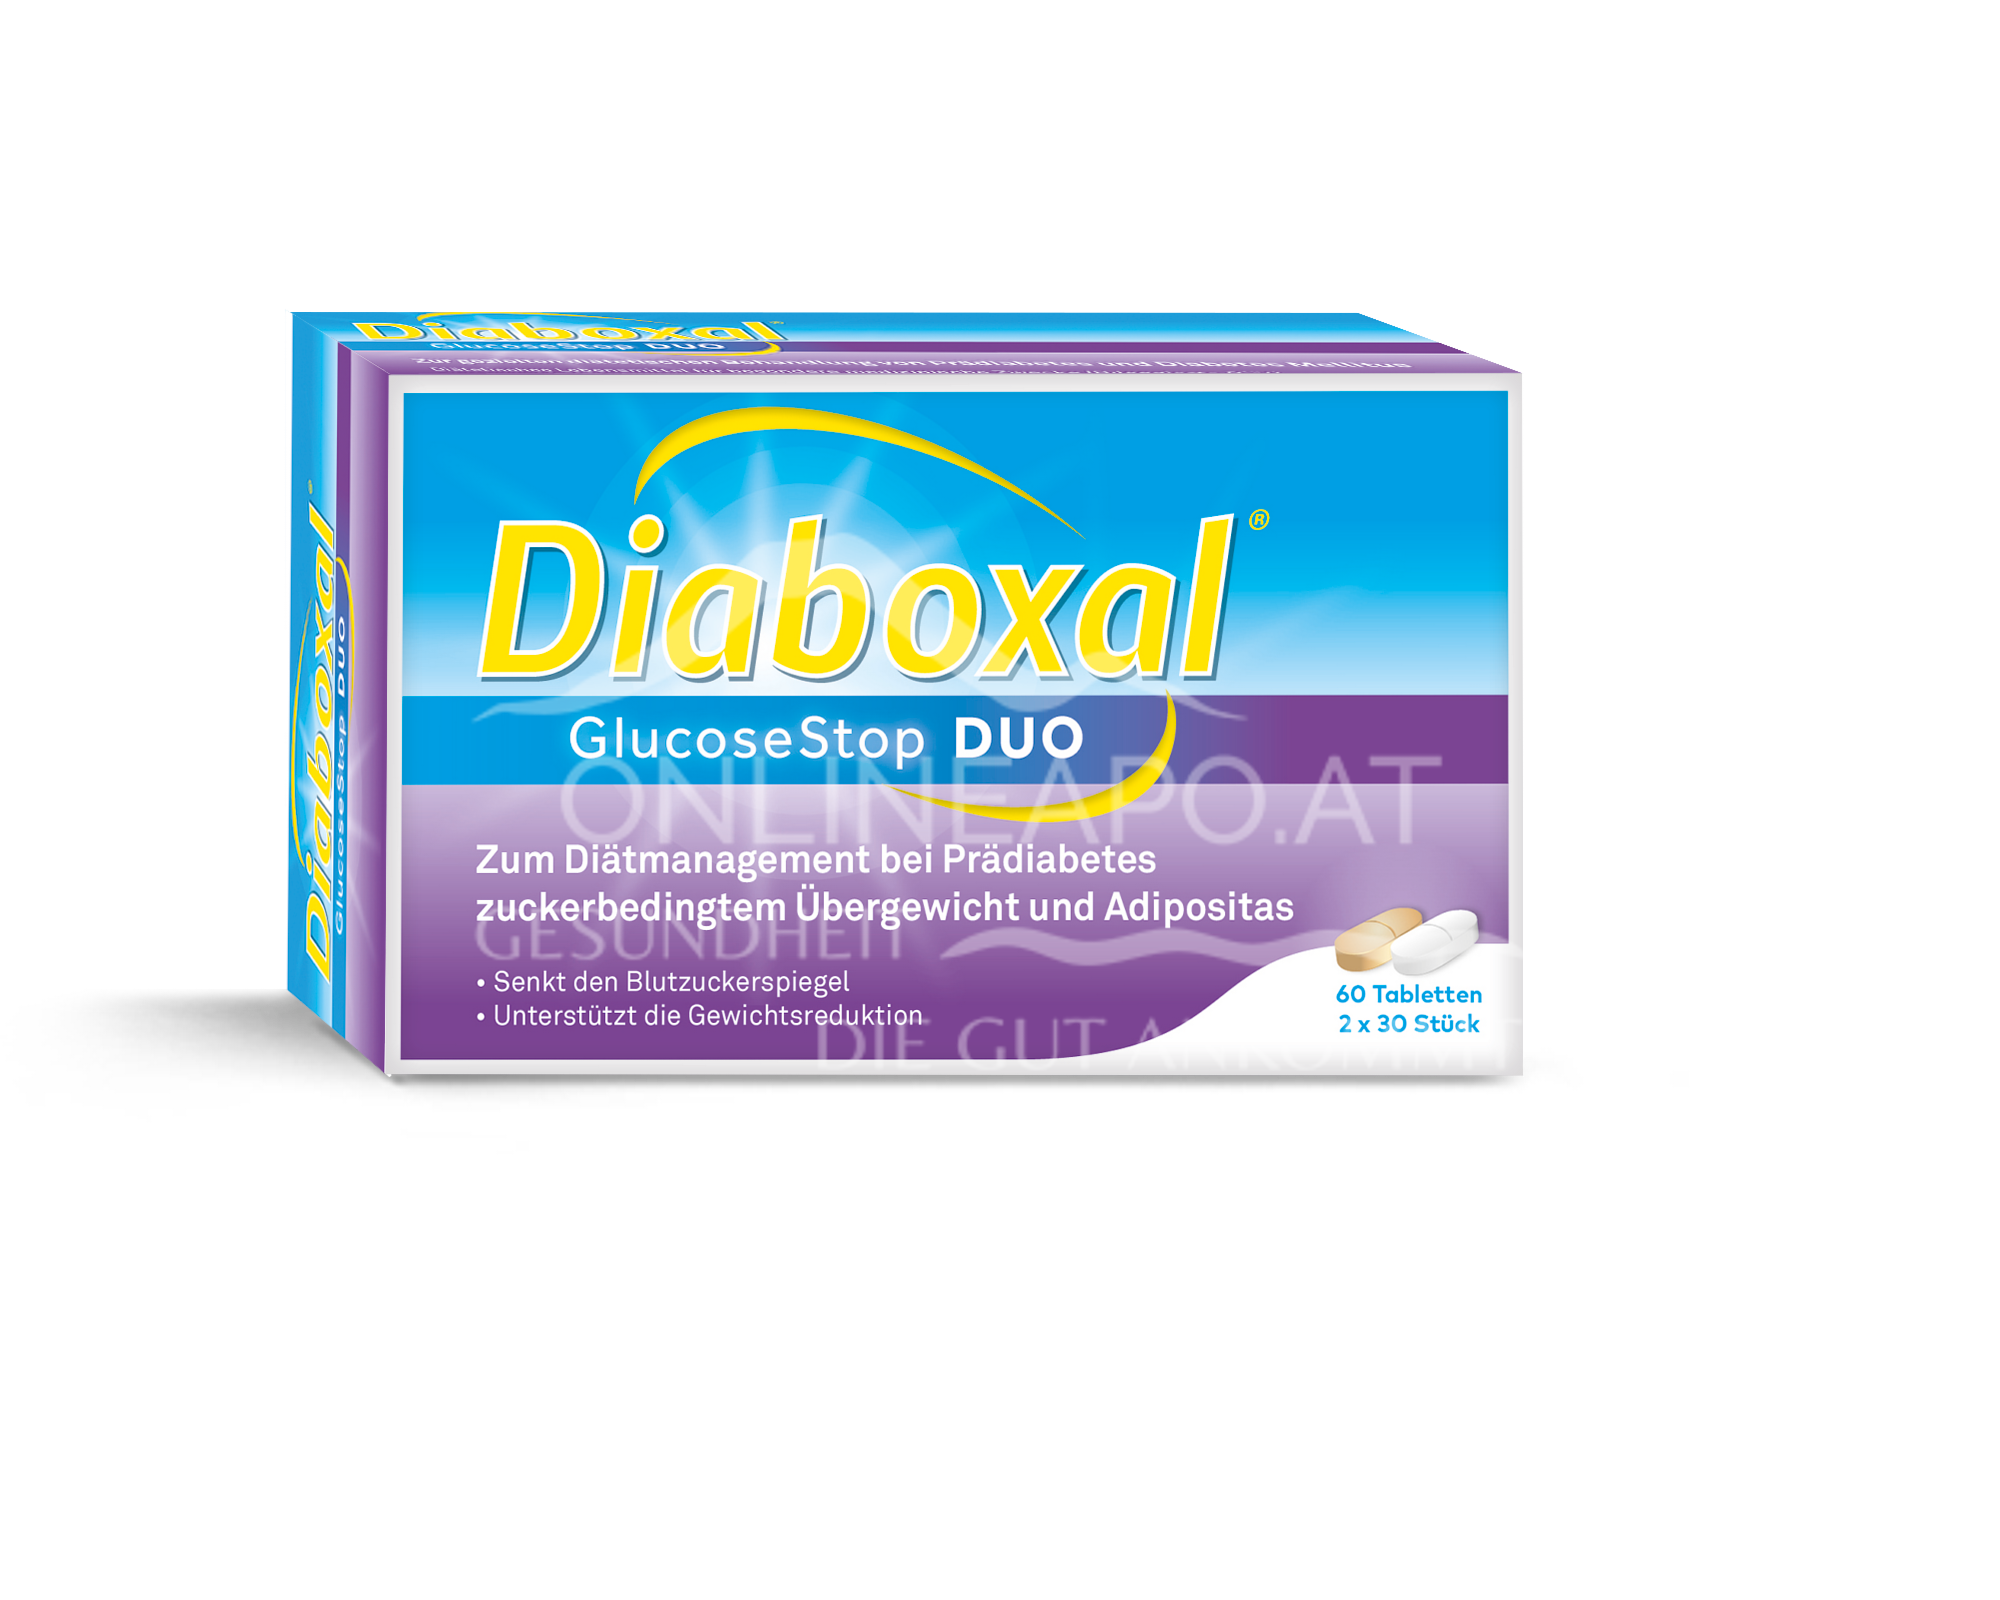 Diaboxal® GlucoseStop DUO